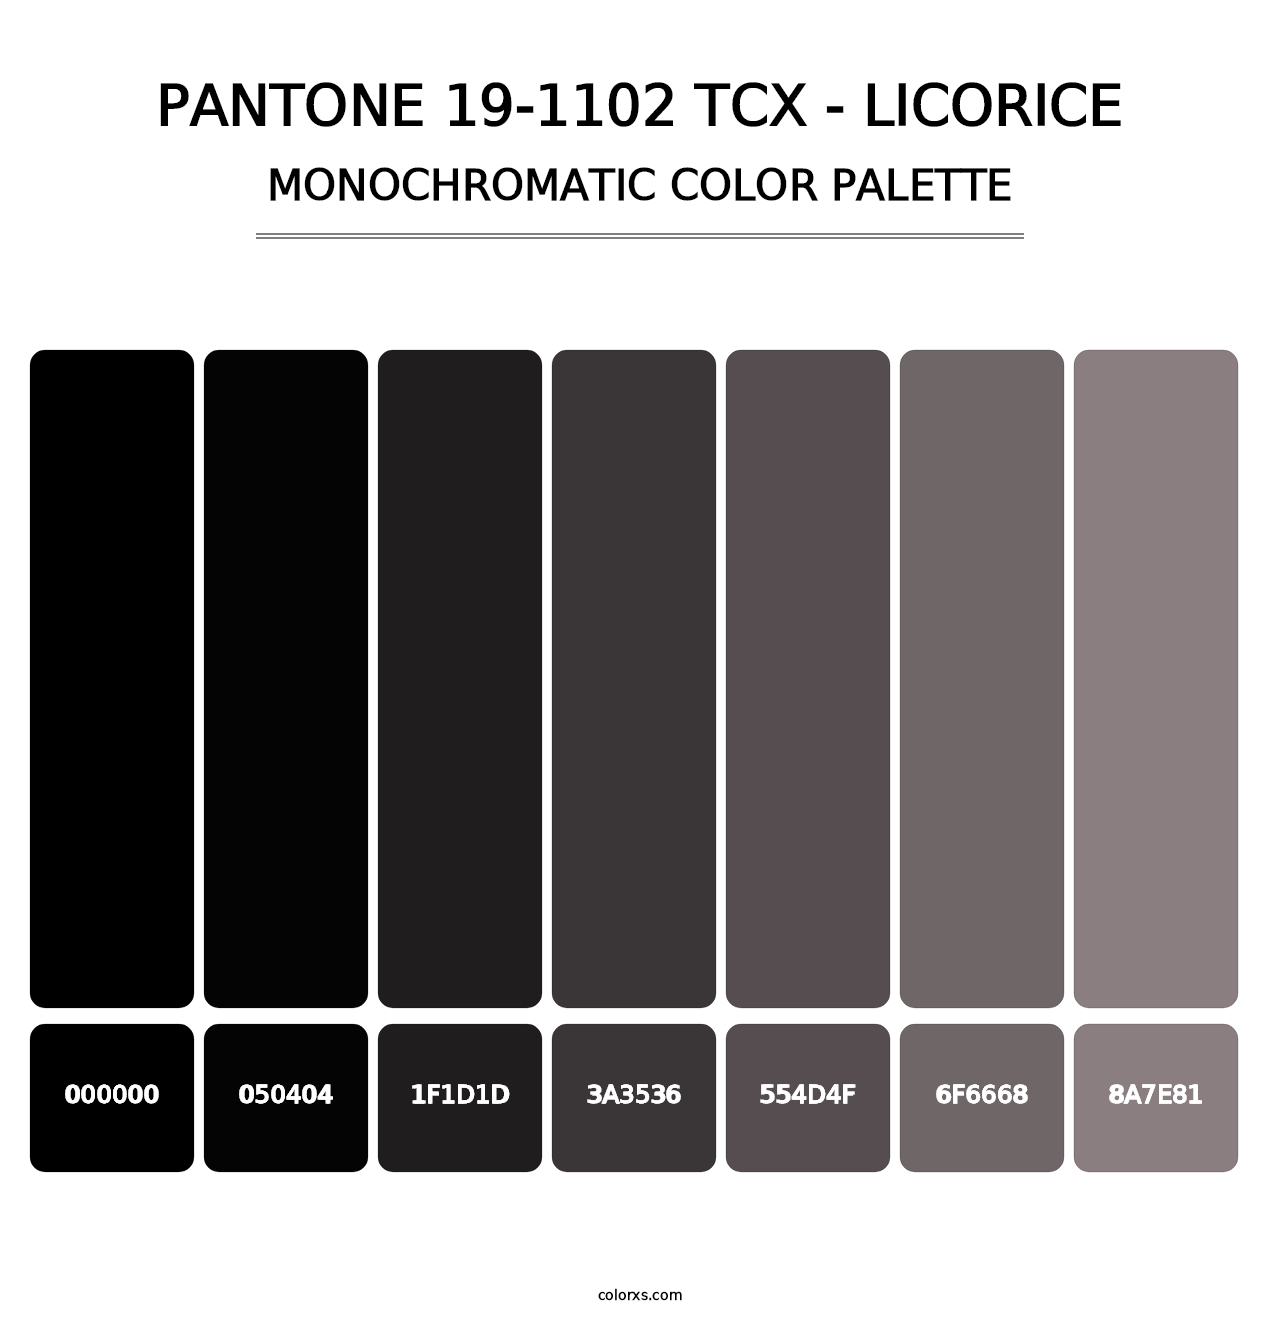 PANTONE 19-1102 TCX - Licorice - Monochromatic Color Palette